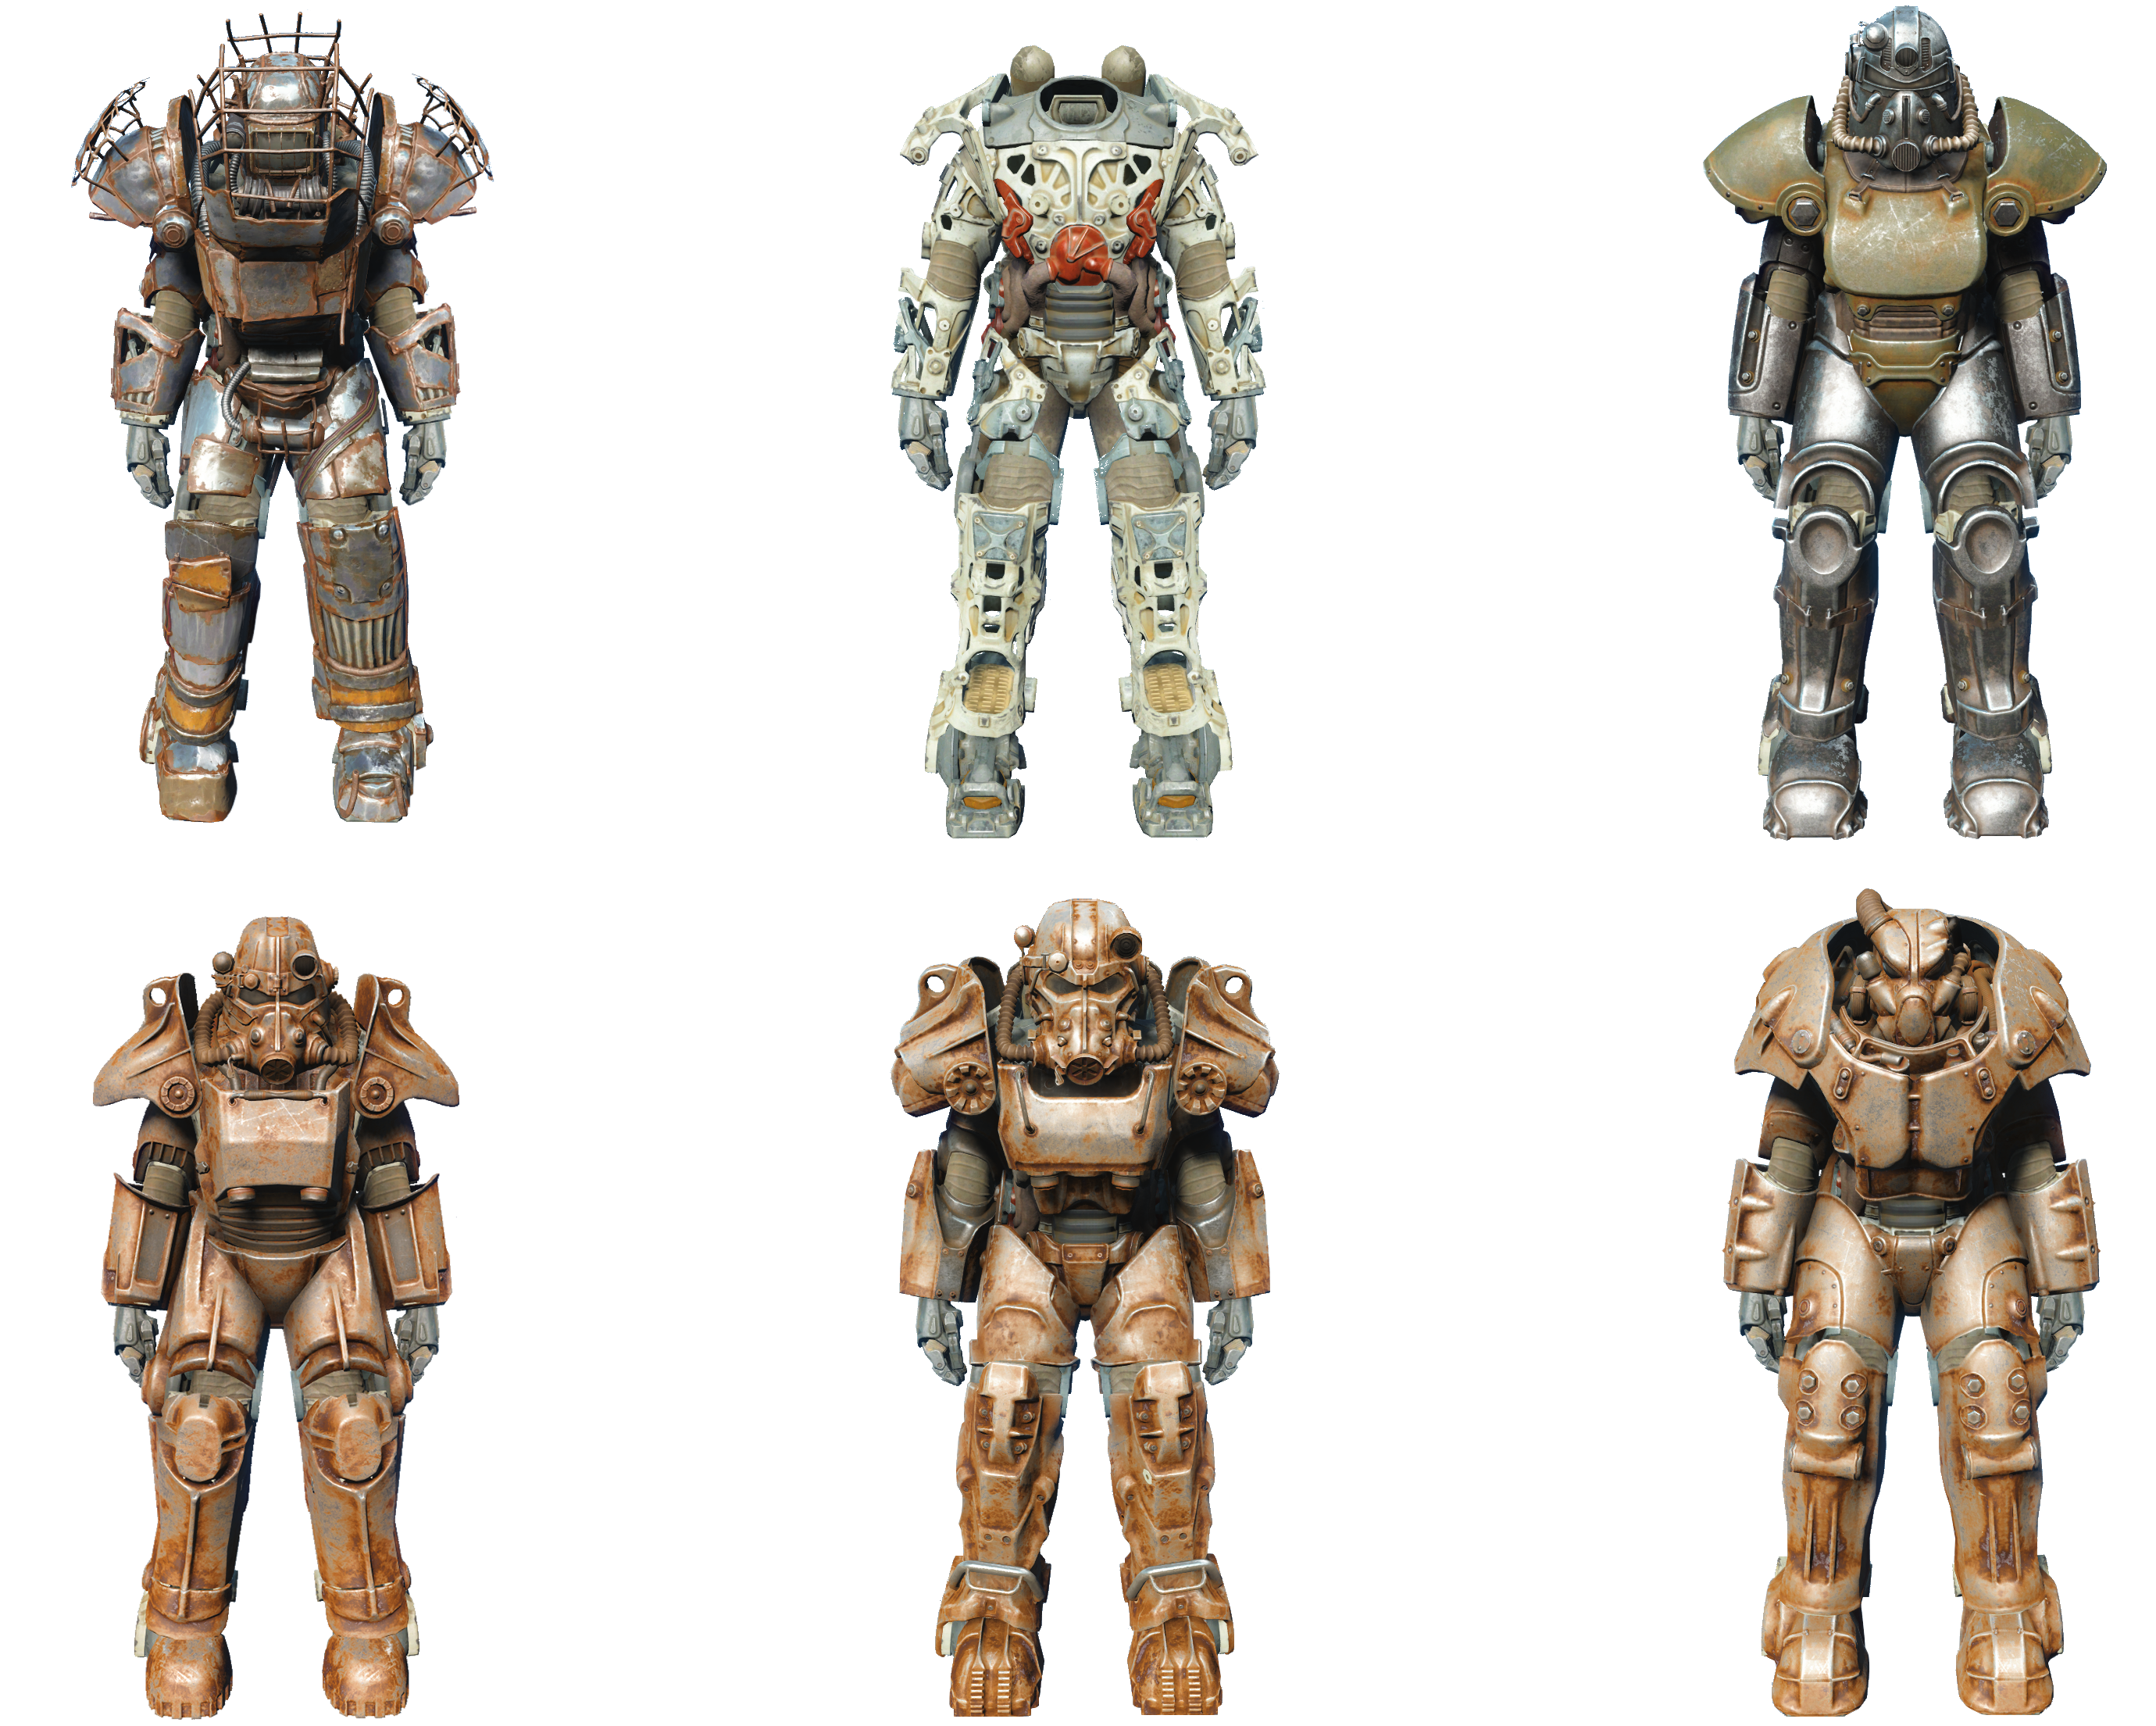 Du bliver bedre Kvadrant Traditionel Power armor (Fallout 4) | Fallout Wiki | Fandom